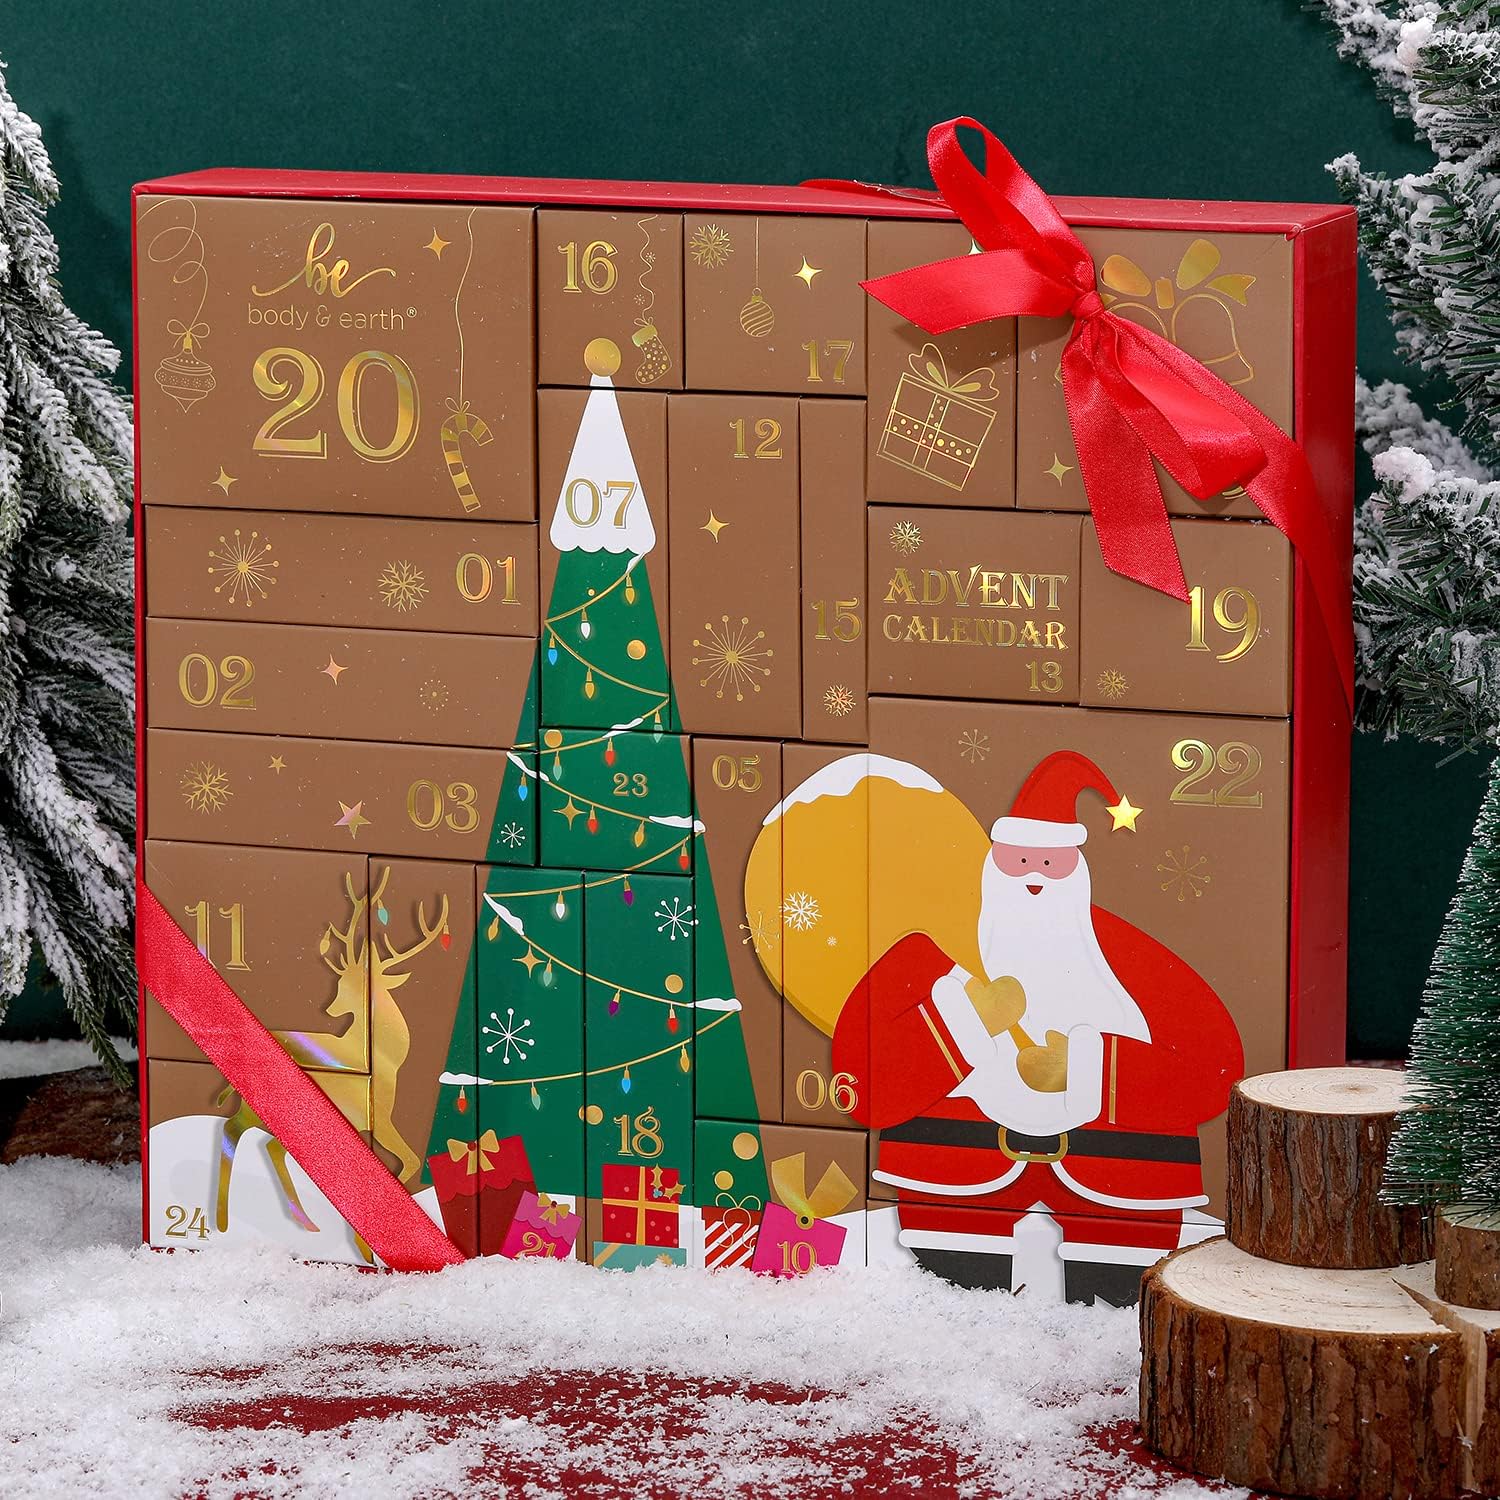 Harry Potter: A Hogwarts Christmas Pop-up (advent Calendar) - By